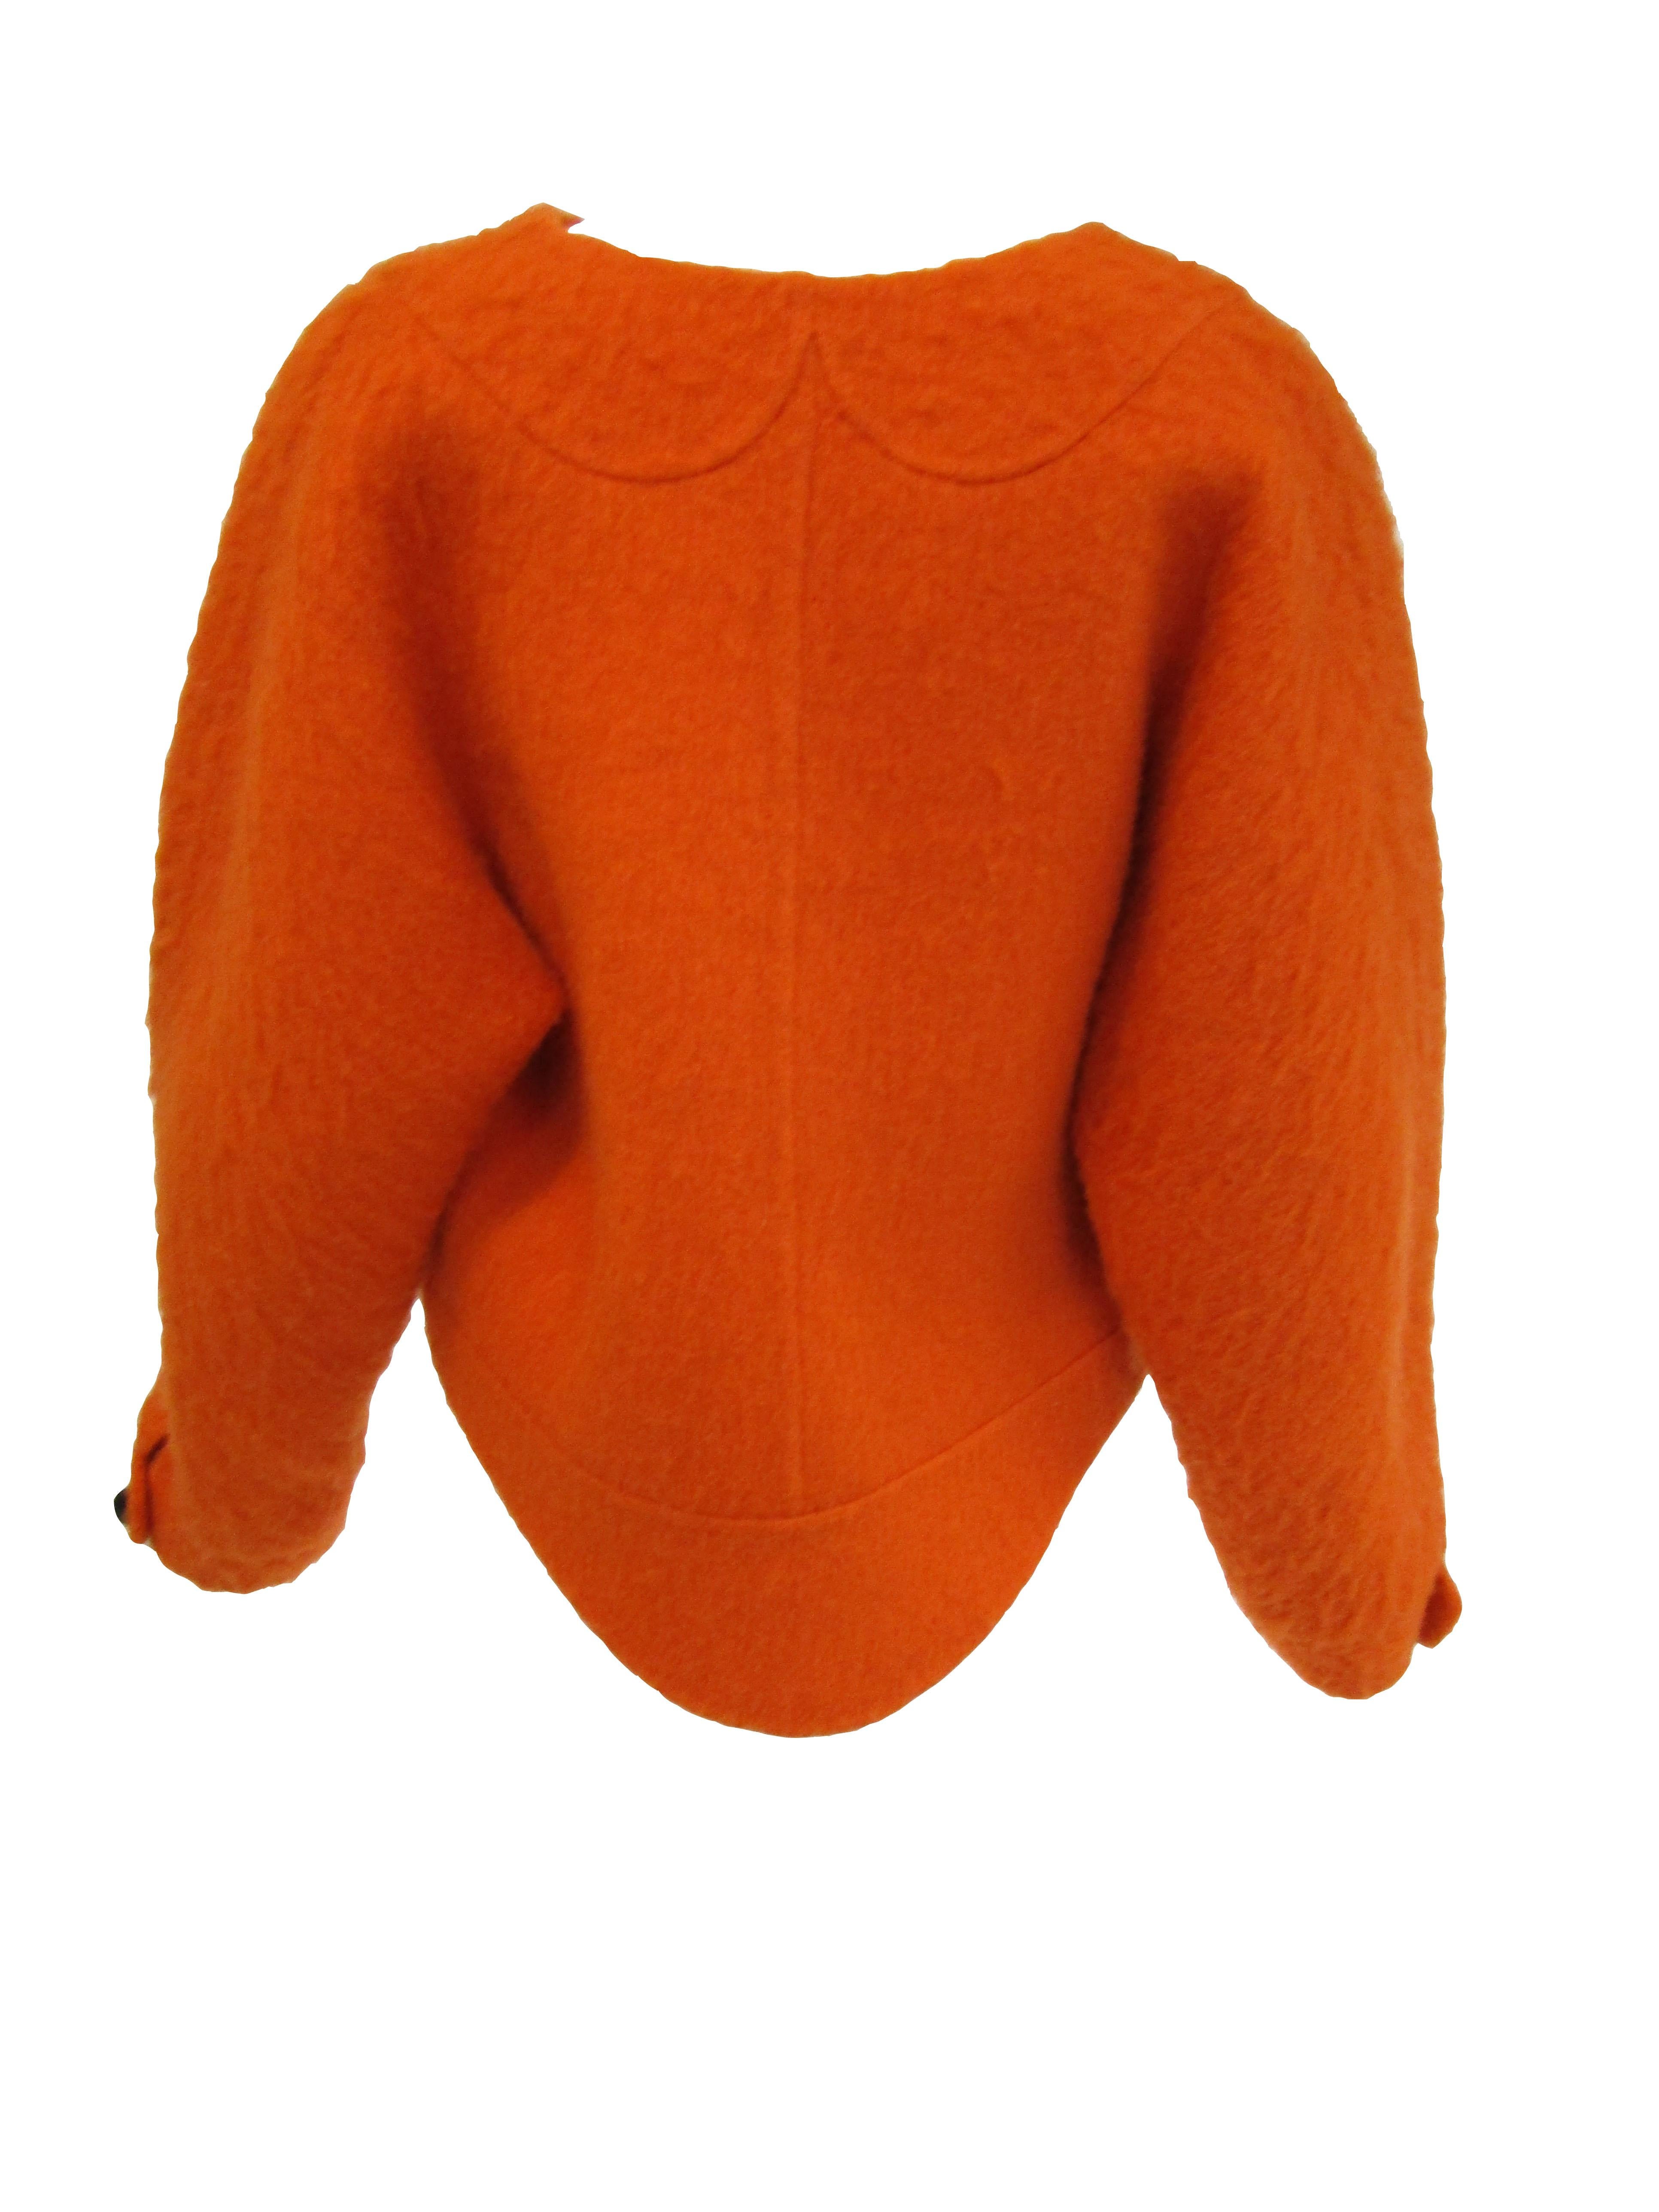  1990s Geoffery Beene Bright Orange Mohair Jacket - Cropped  For Sale 2